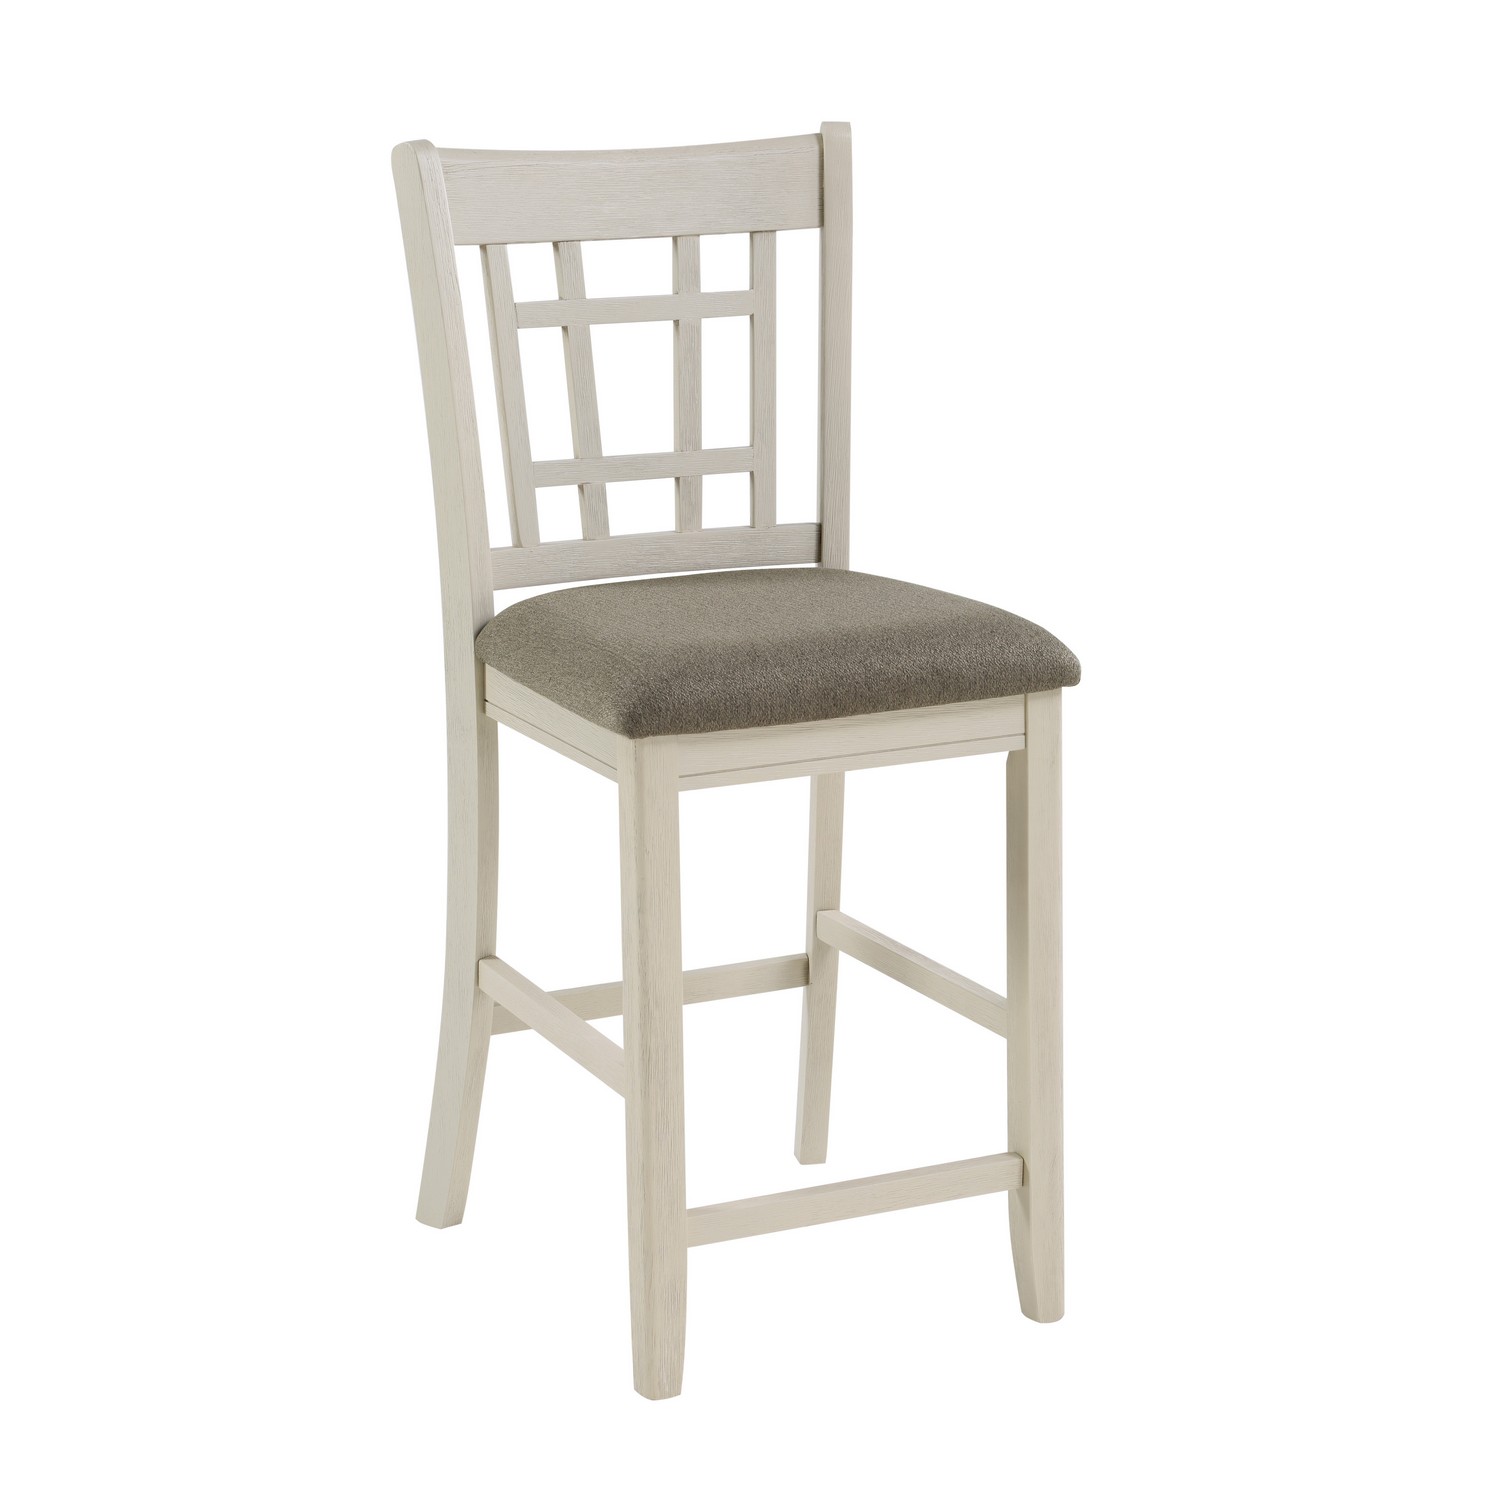 Homelegance Junipero Counter Height Chair - Antique White